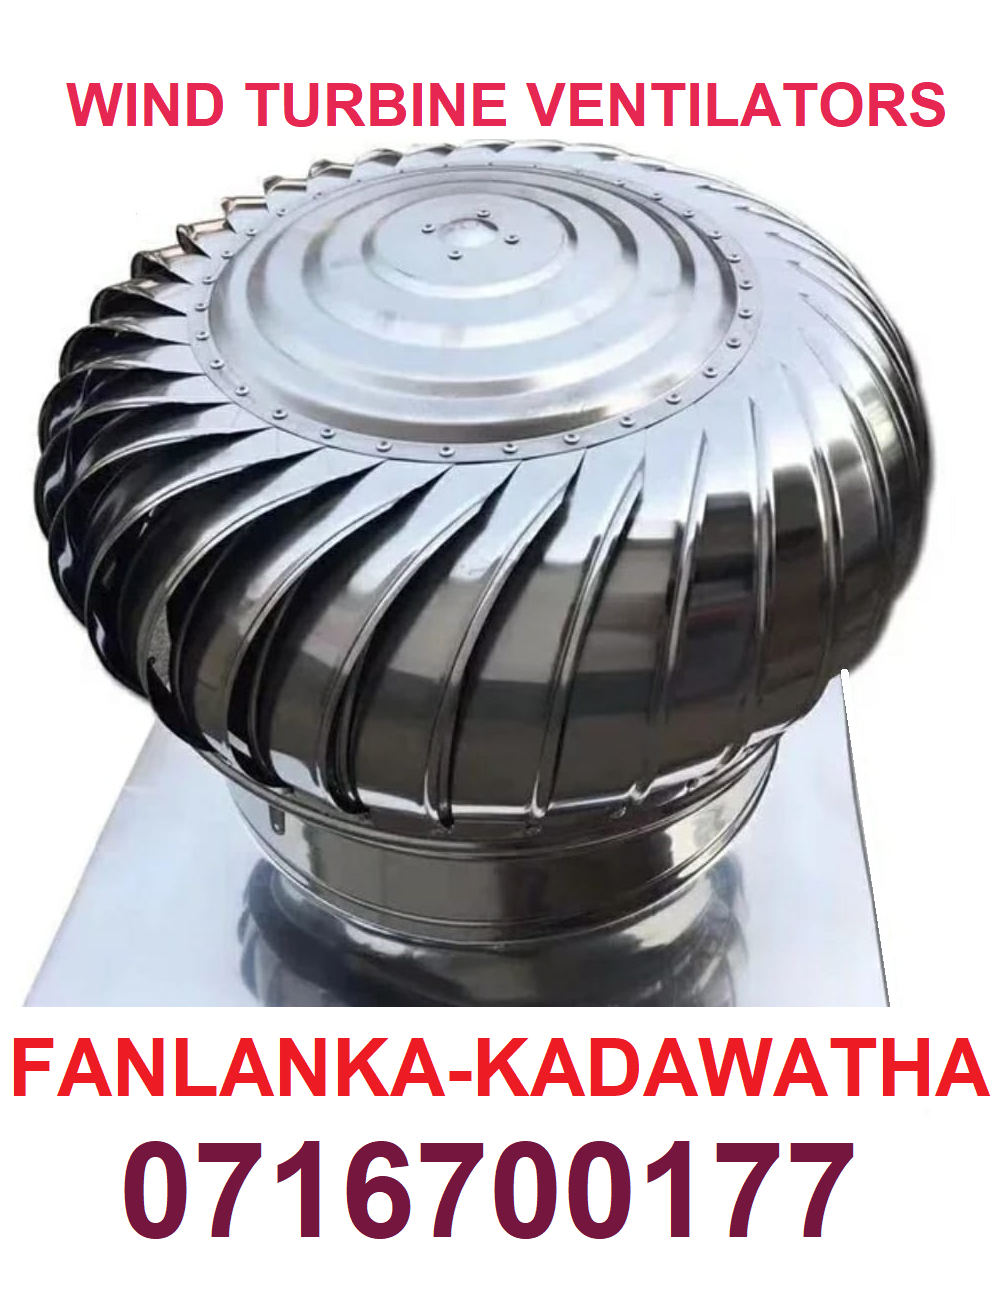 roof turbine ventilators sri lanka , wind turbine roof fans sri lanka ventilation system suppliers srilanka